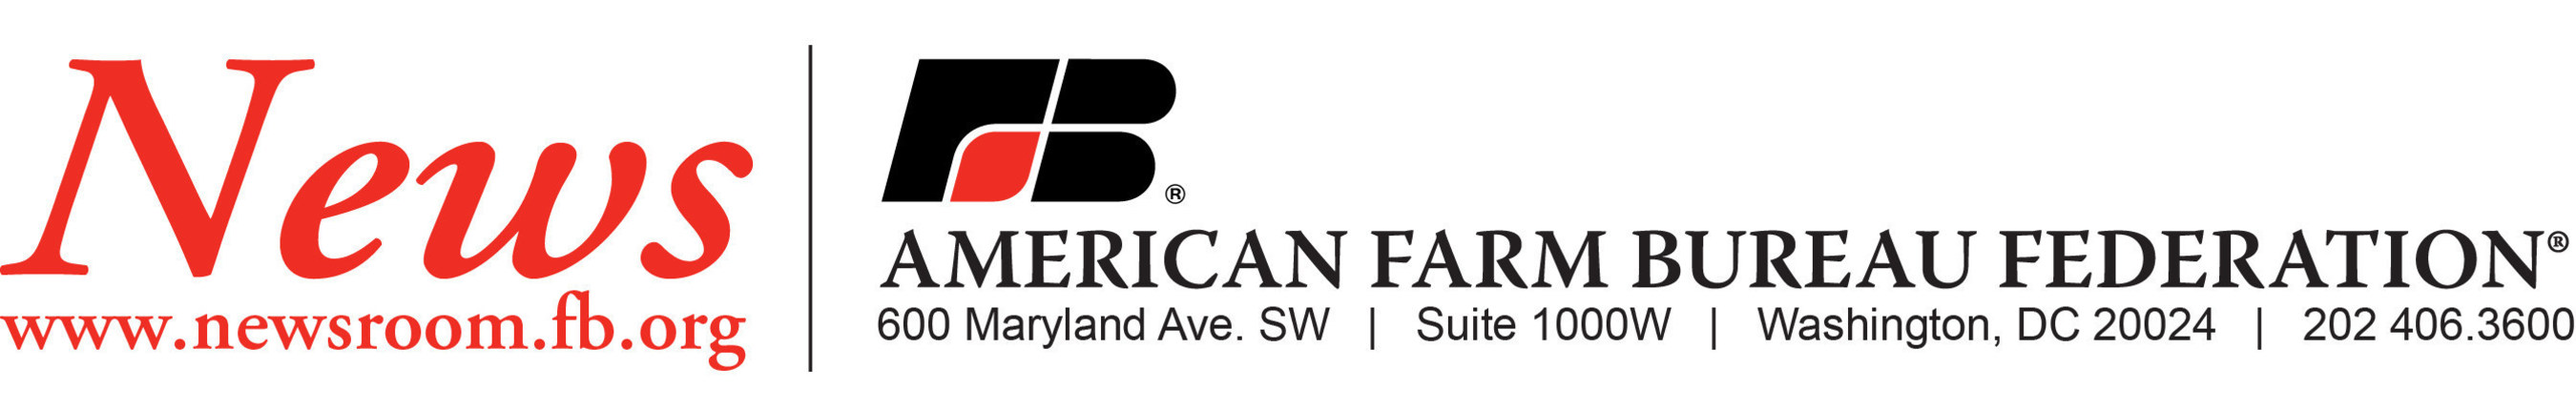 American Farm Bureau Federation News release letterhead